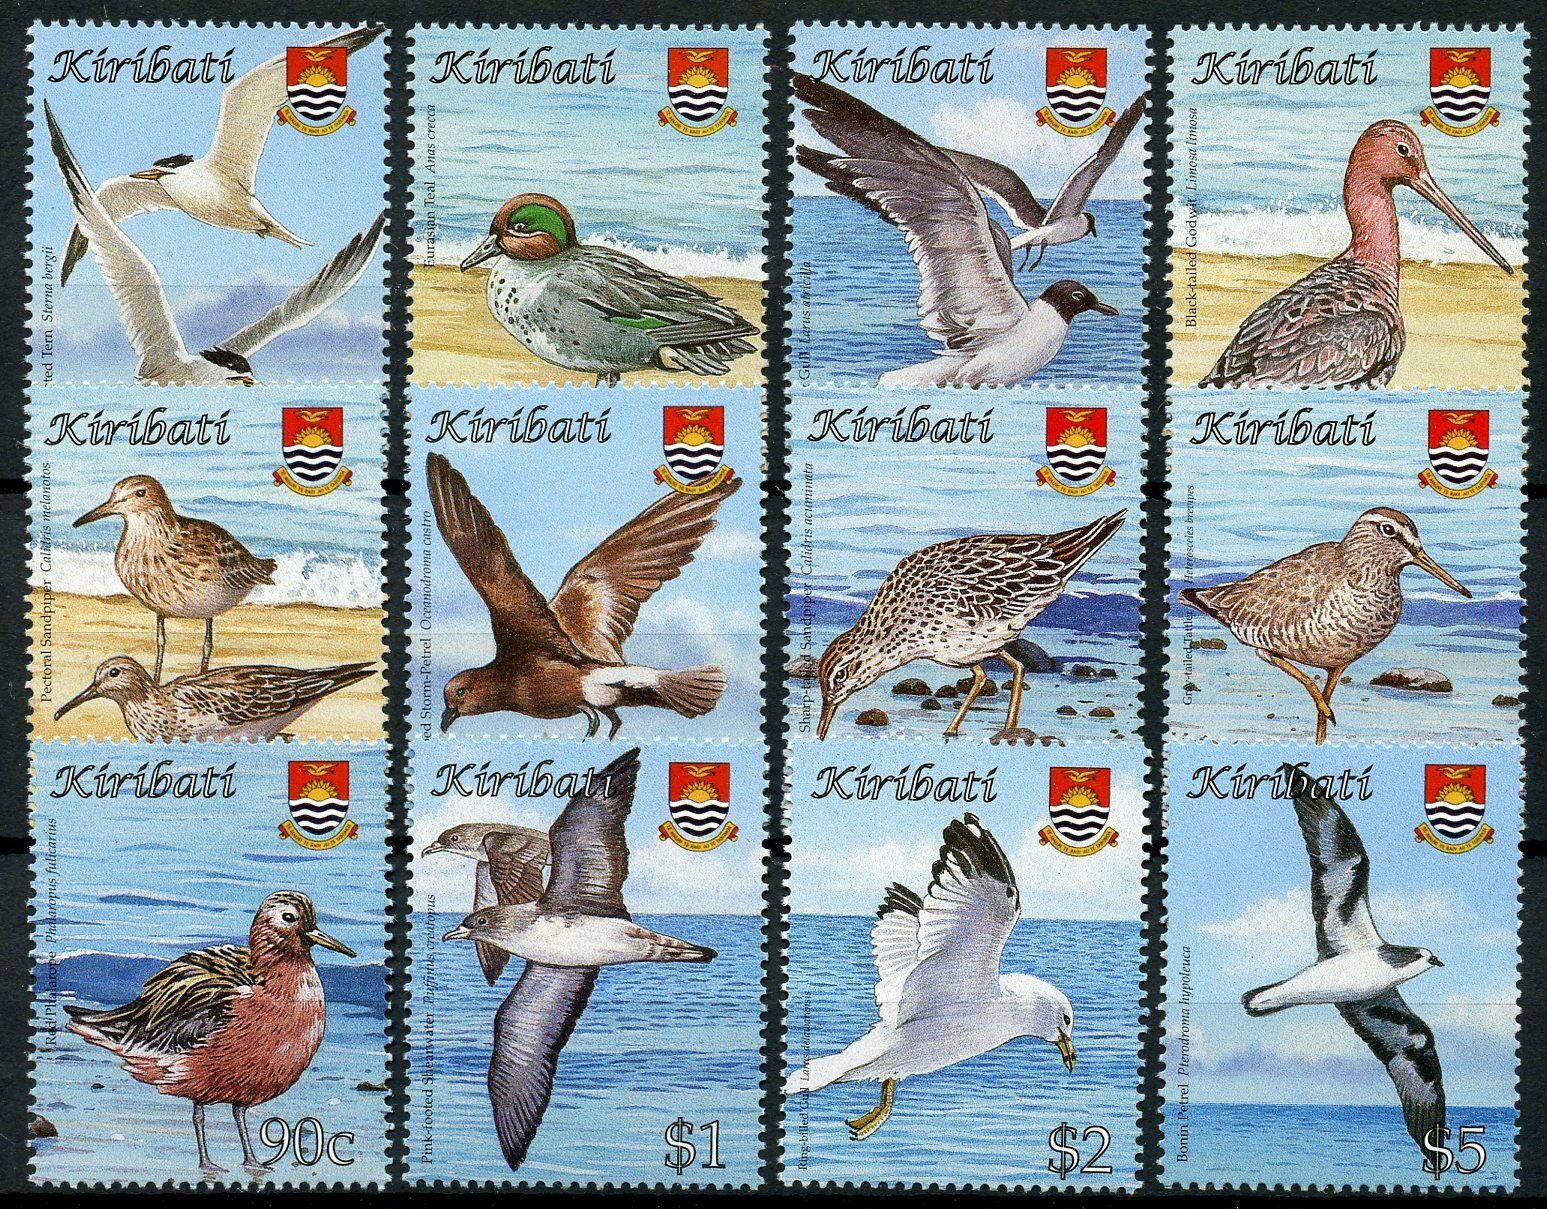 Kiribati 2008 MNH Birds on Stamps Bird Definitives Terns Gulls Ducks Waders 12v Set